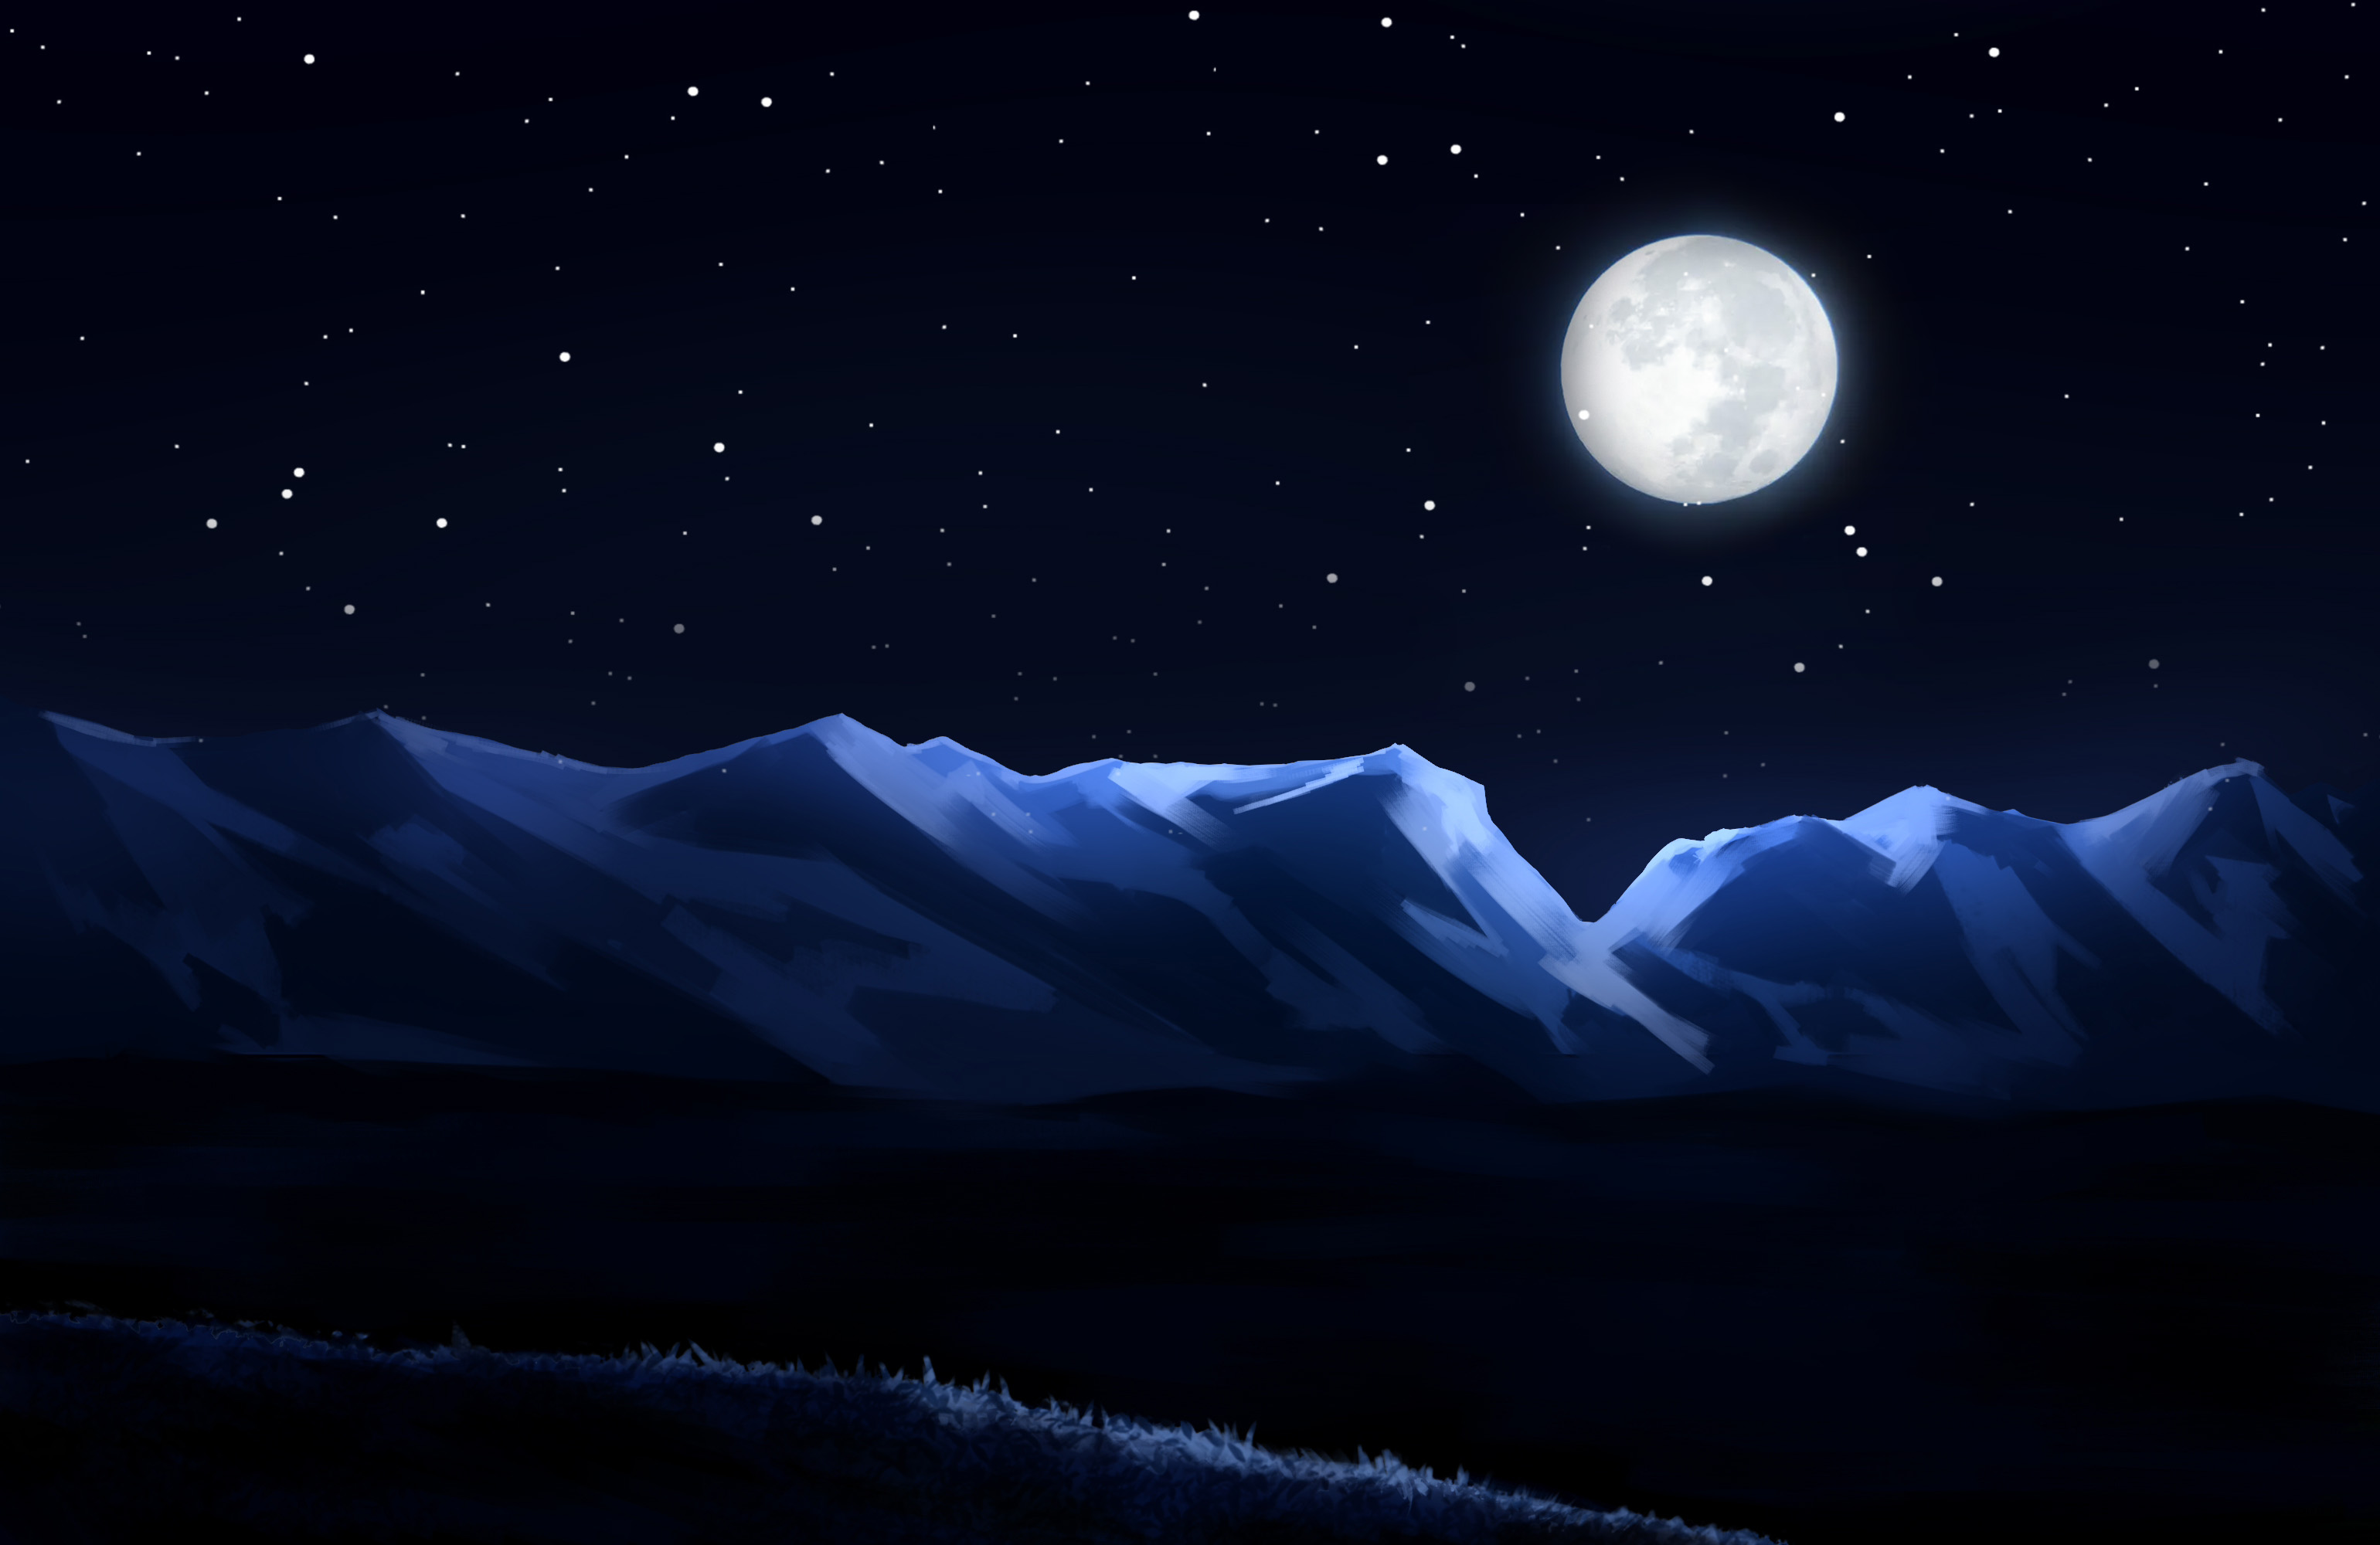 General 3080x2000 Moon digital art night nature mountains dark background moonlight landscape stars artwork Linux